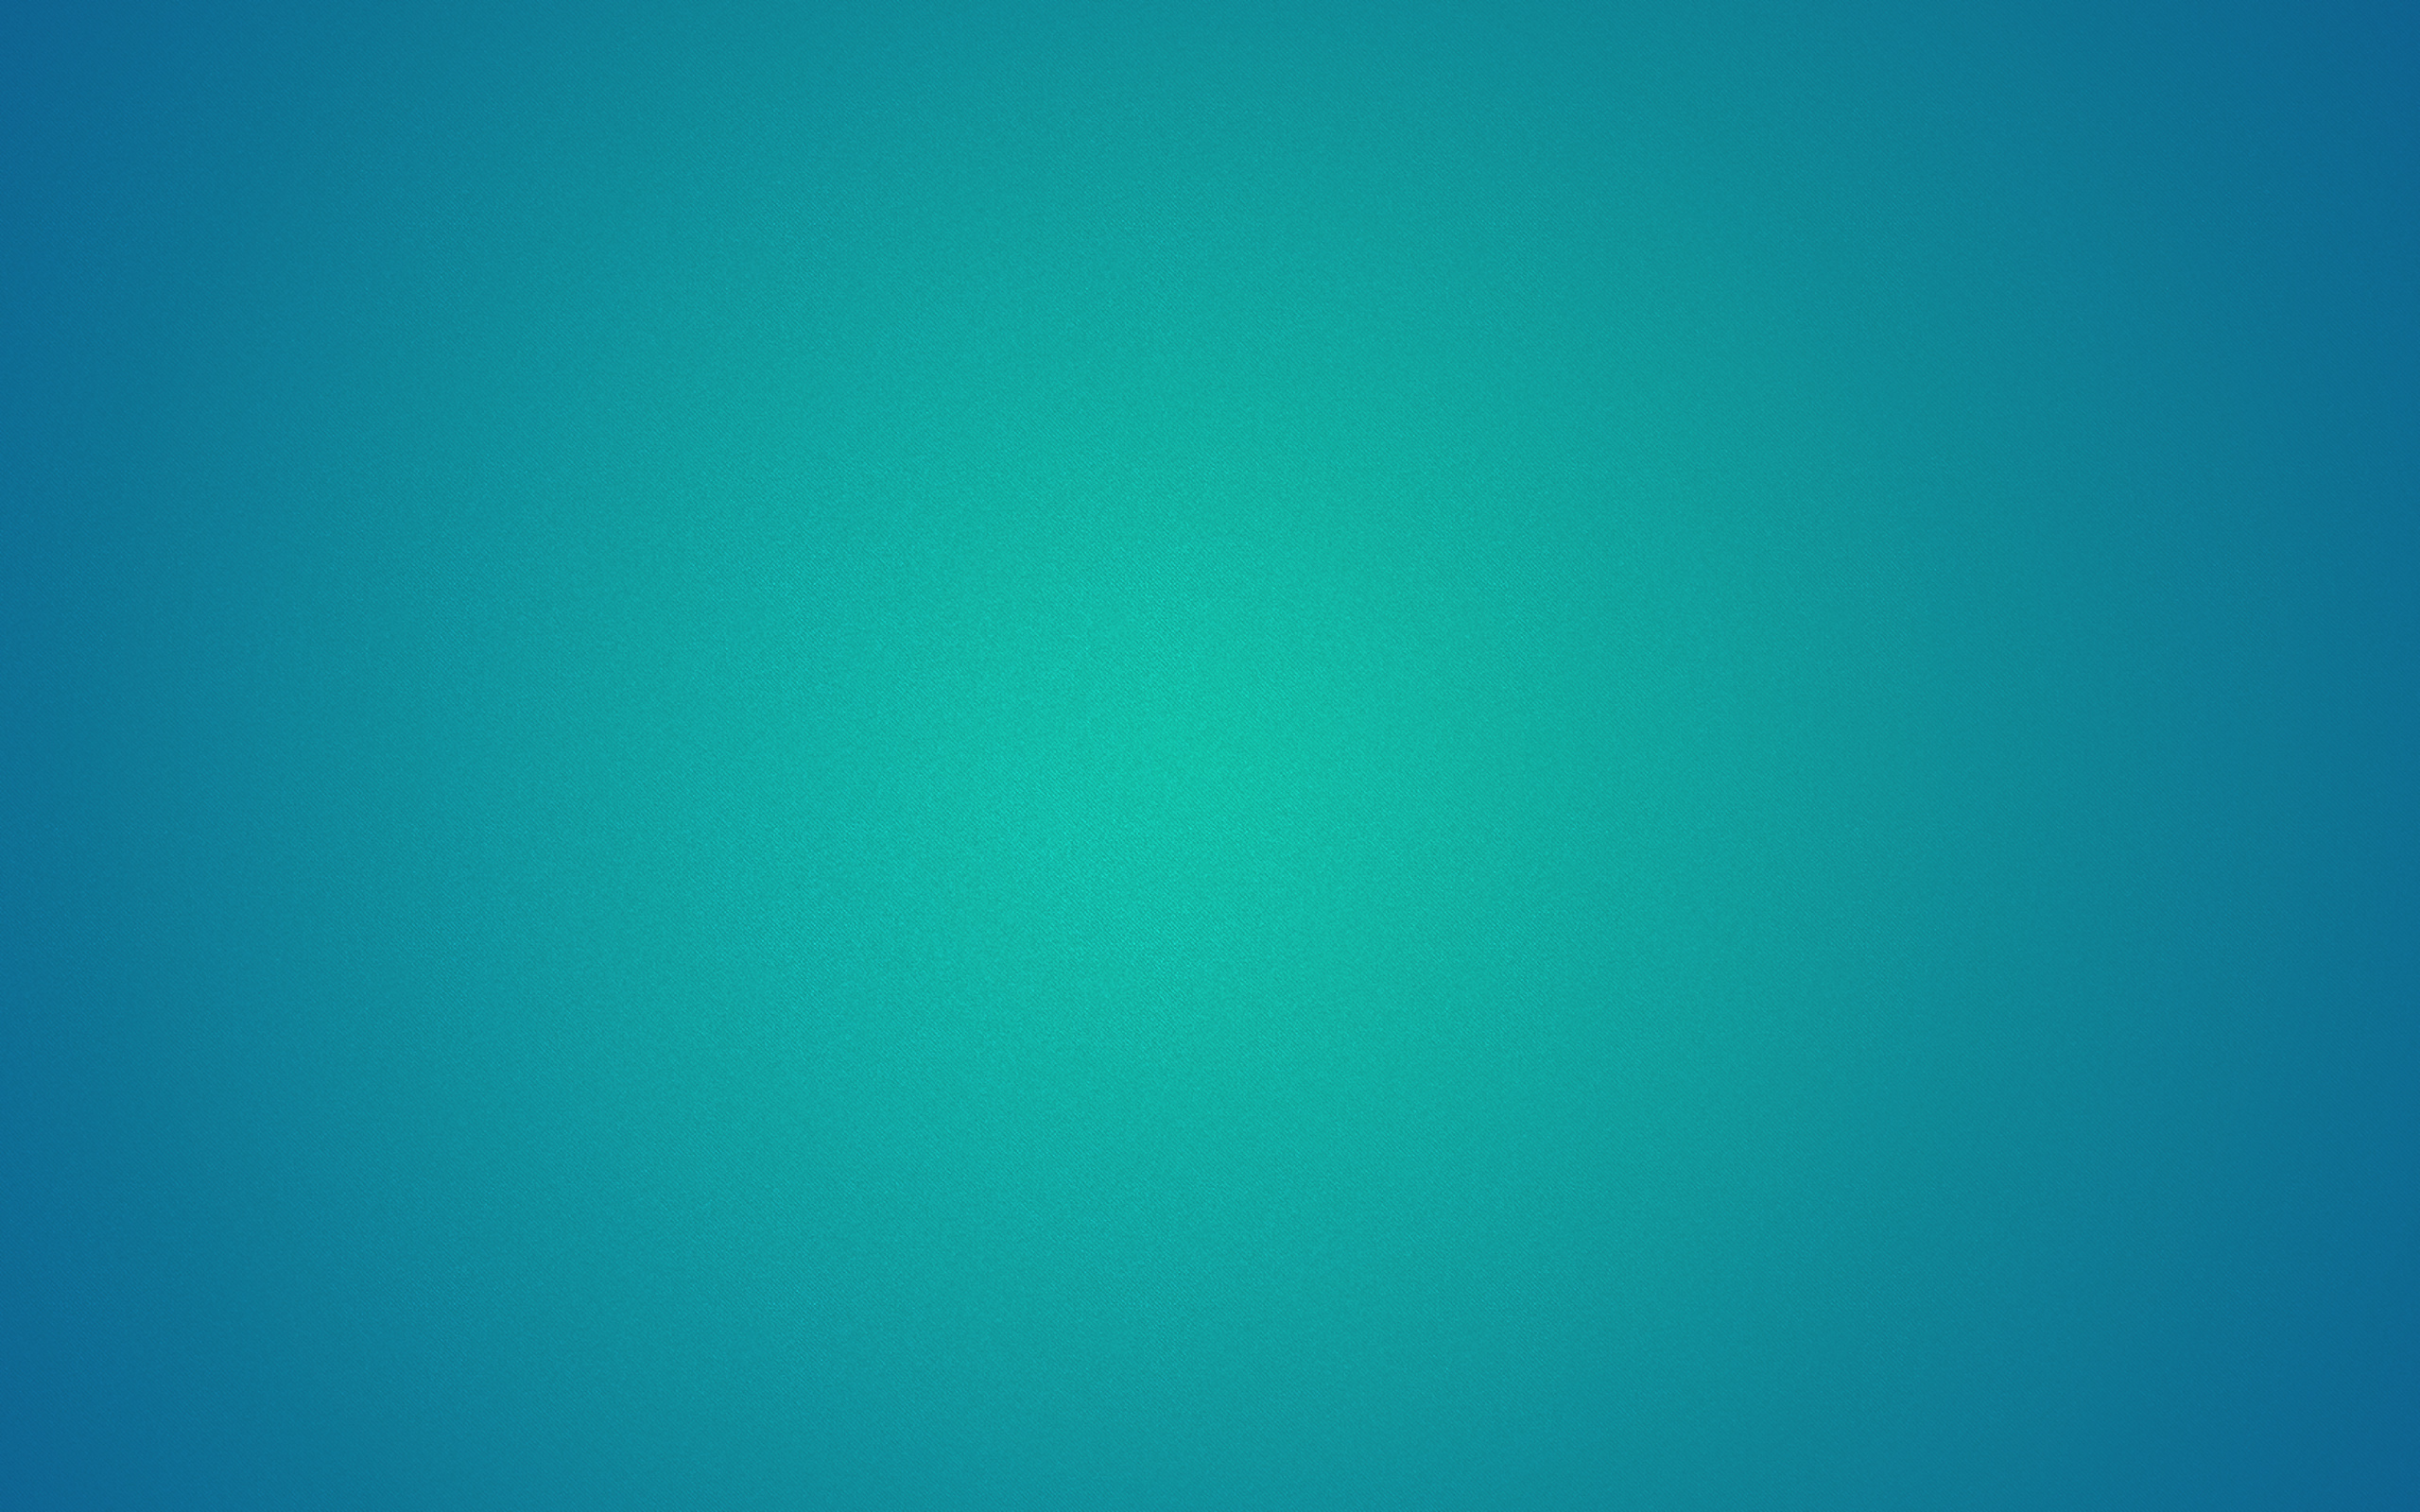 ubuntu gnome fondo de pantalla,azul,verde,agua,turquesa,verde azulado